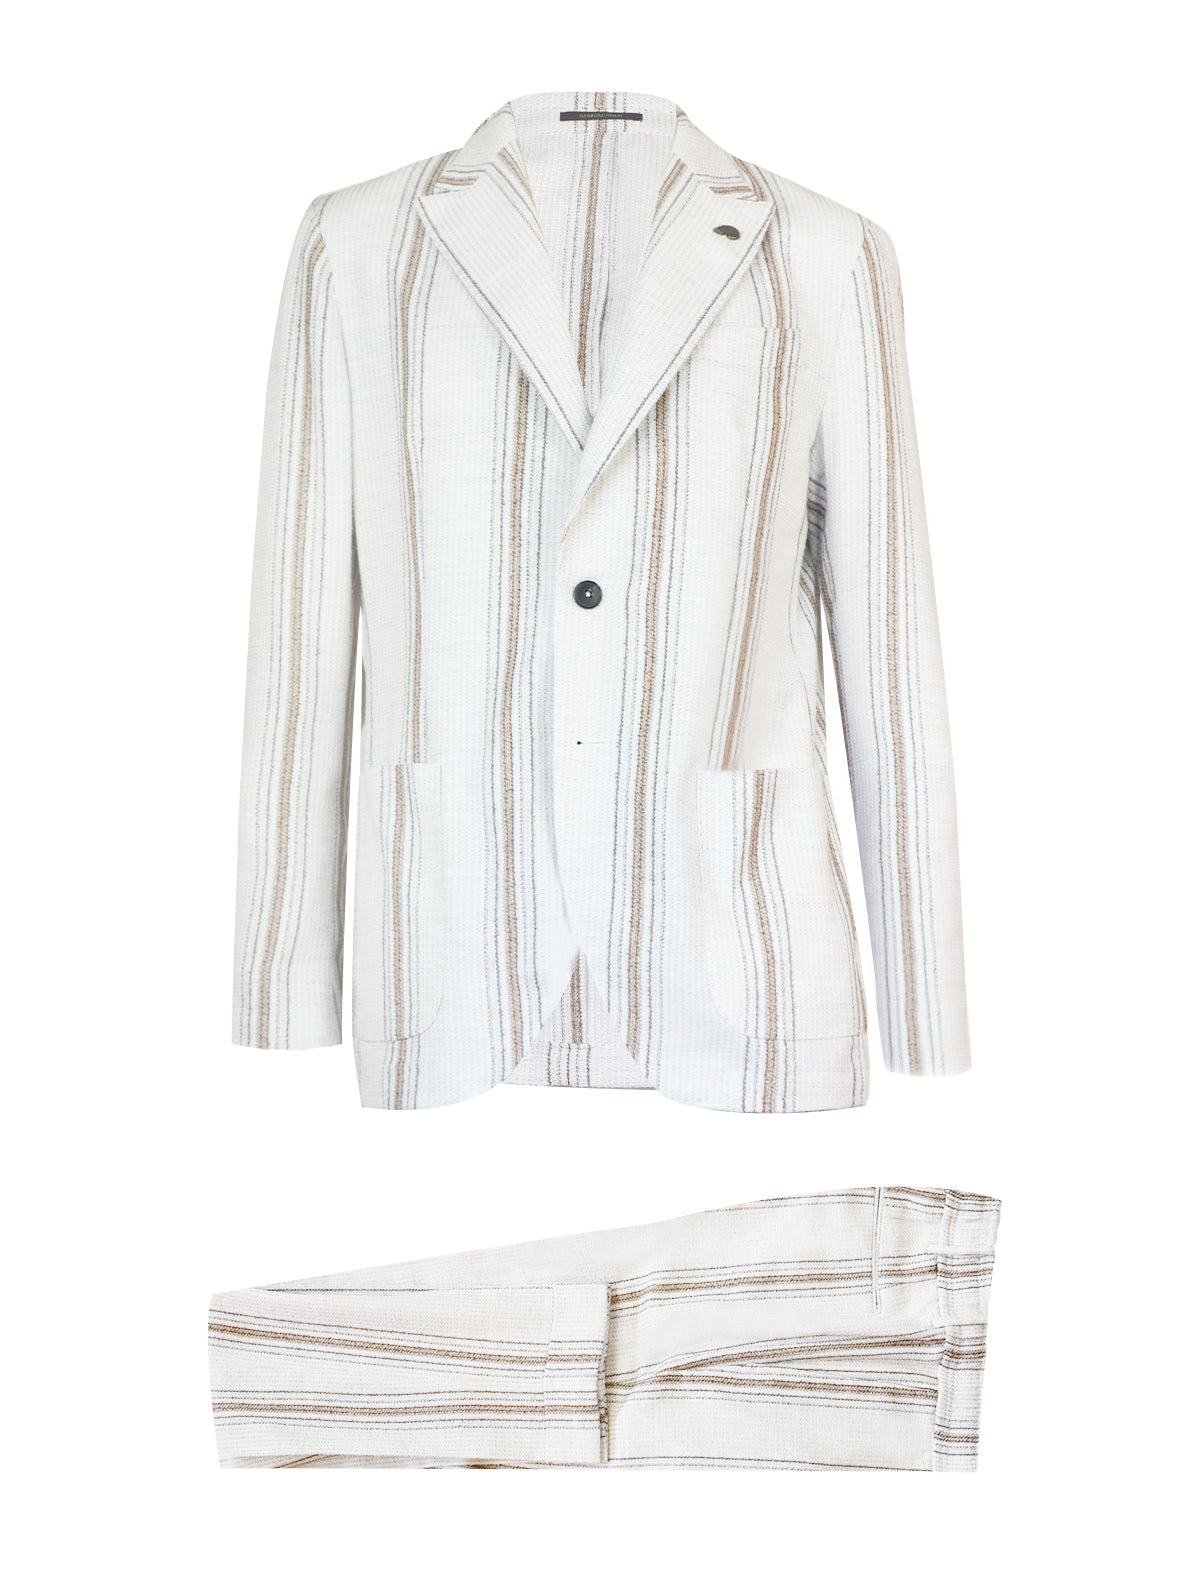 GABRIELE PASINI 2-Piece Suit in White Beige Stripes